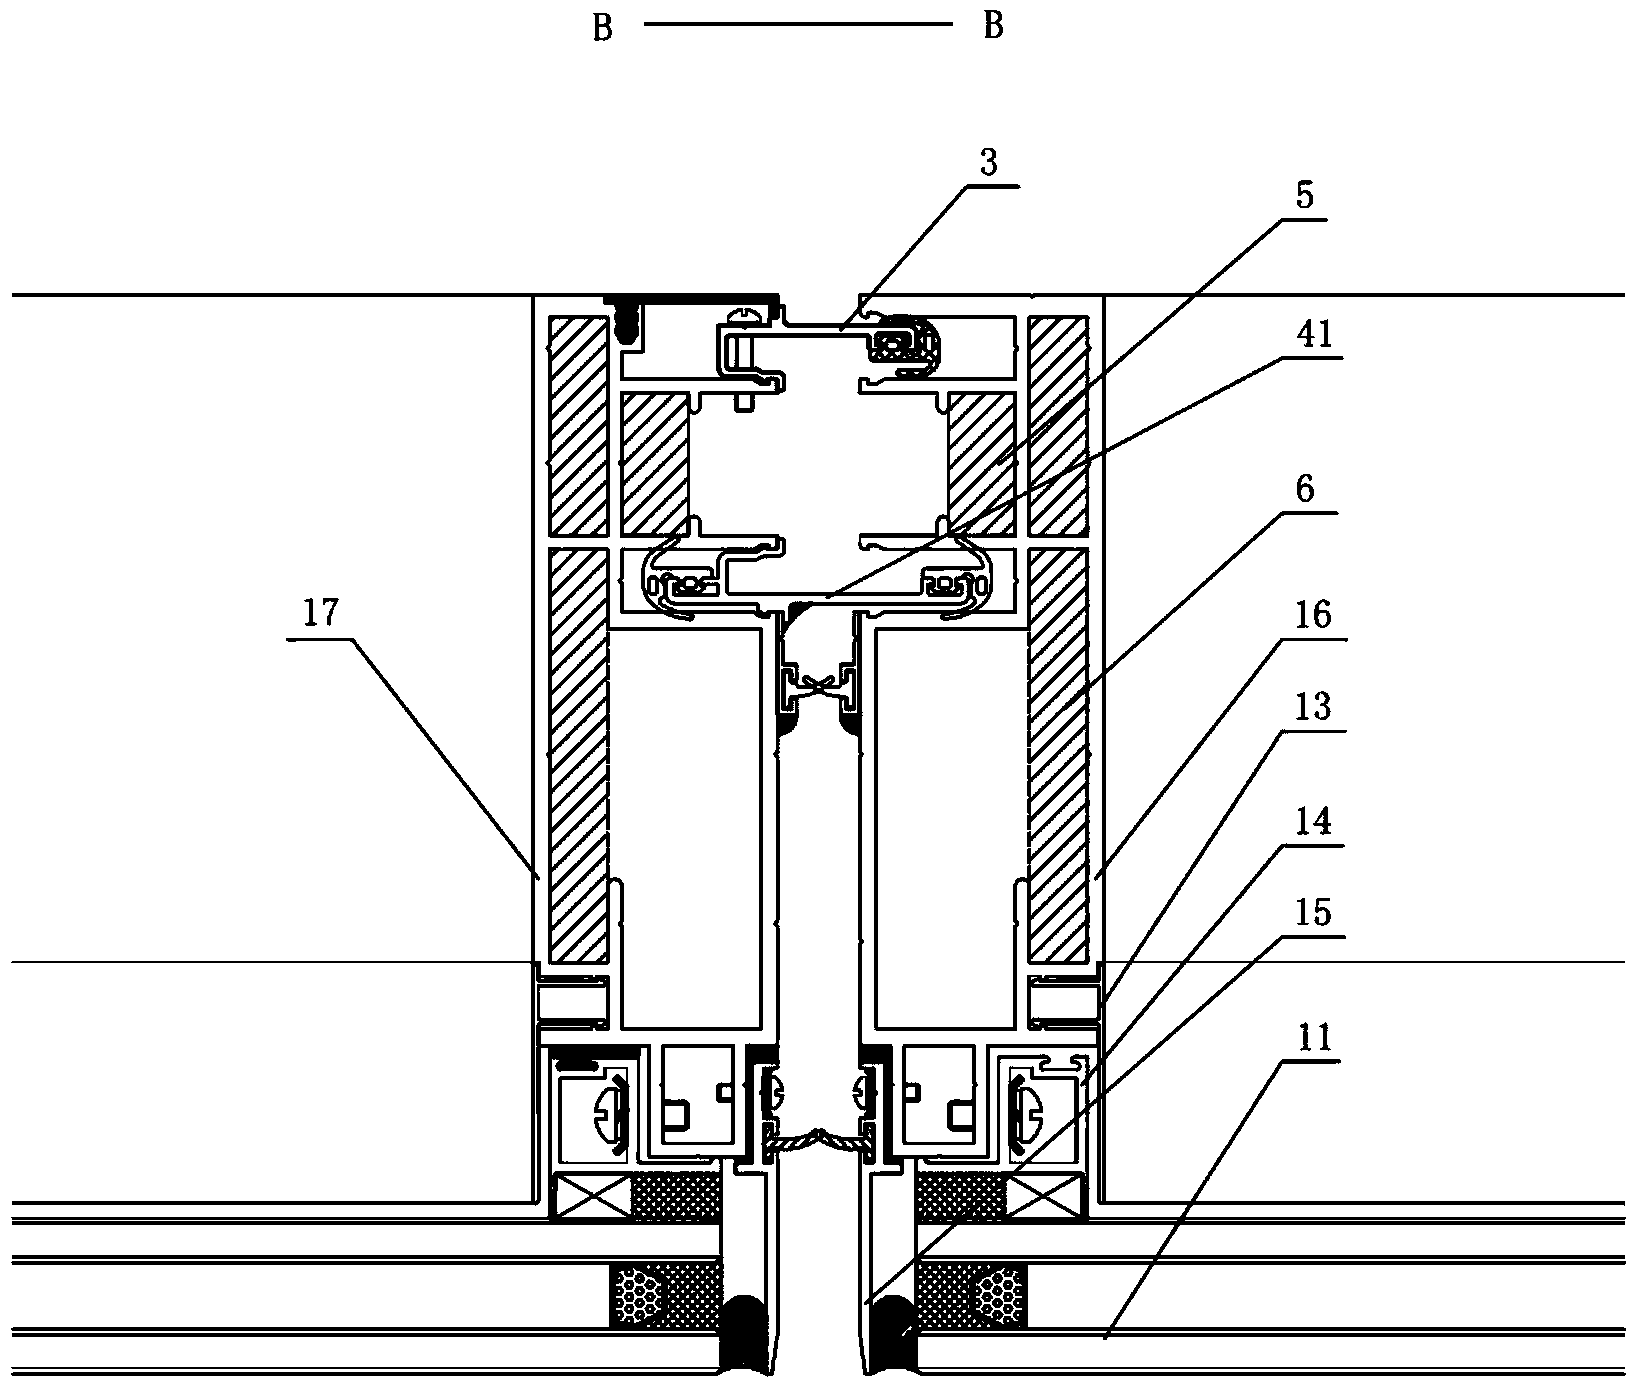 Ventilation transverse locking type unit curtain wall system